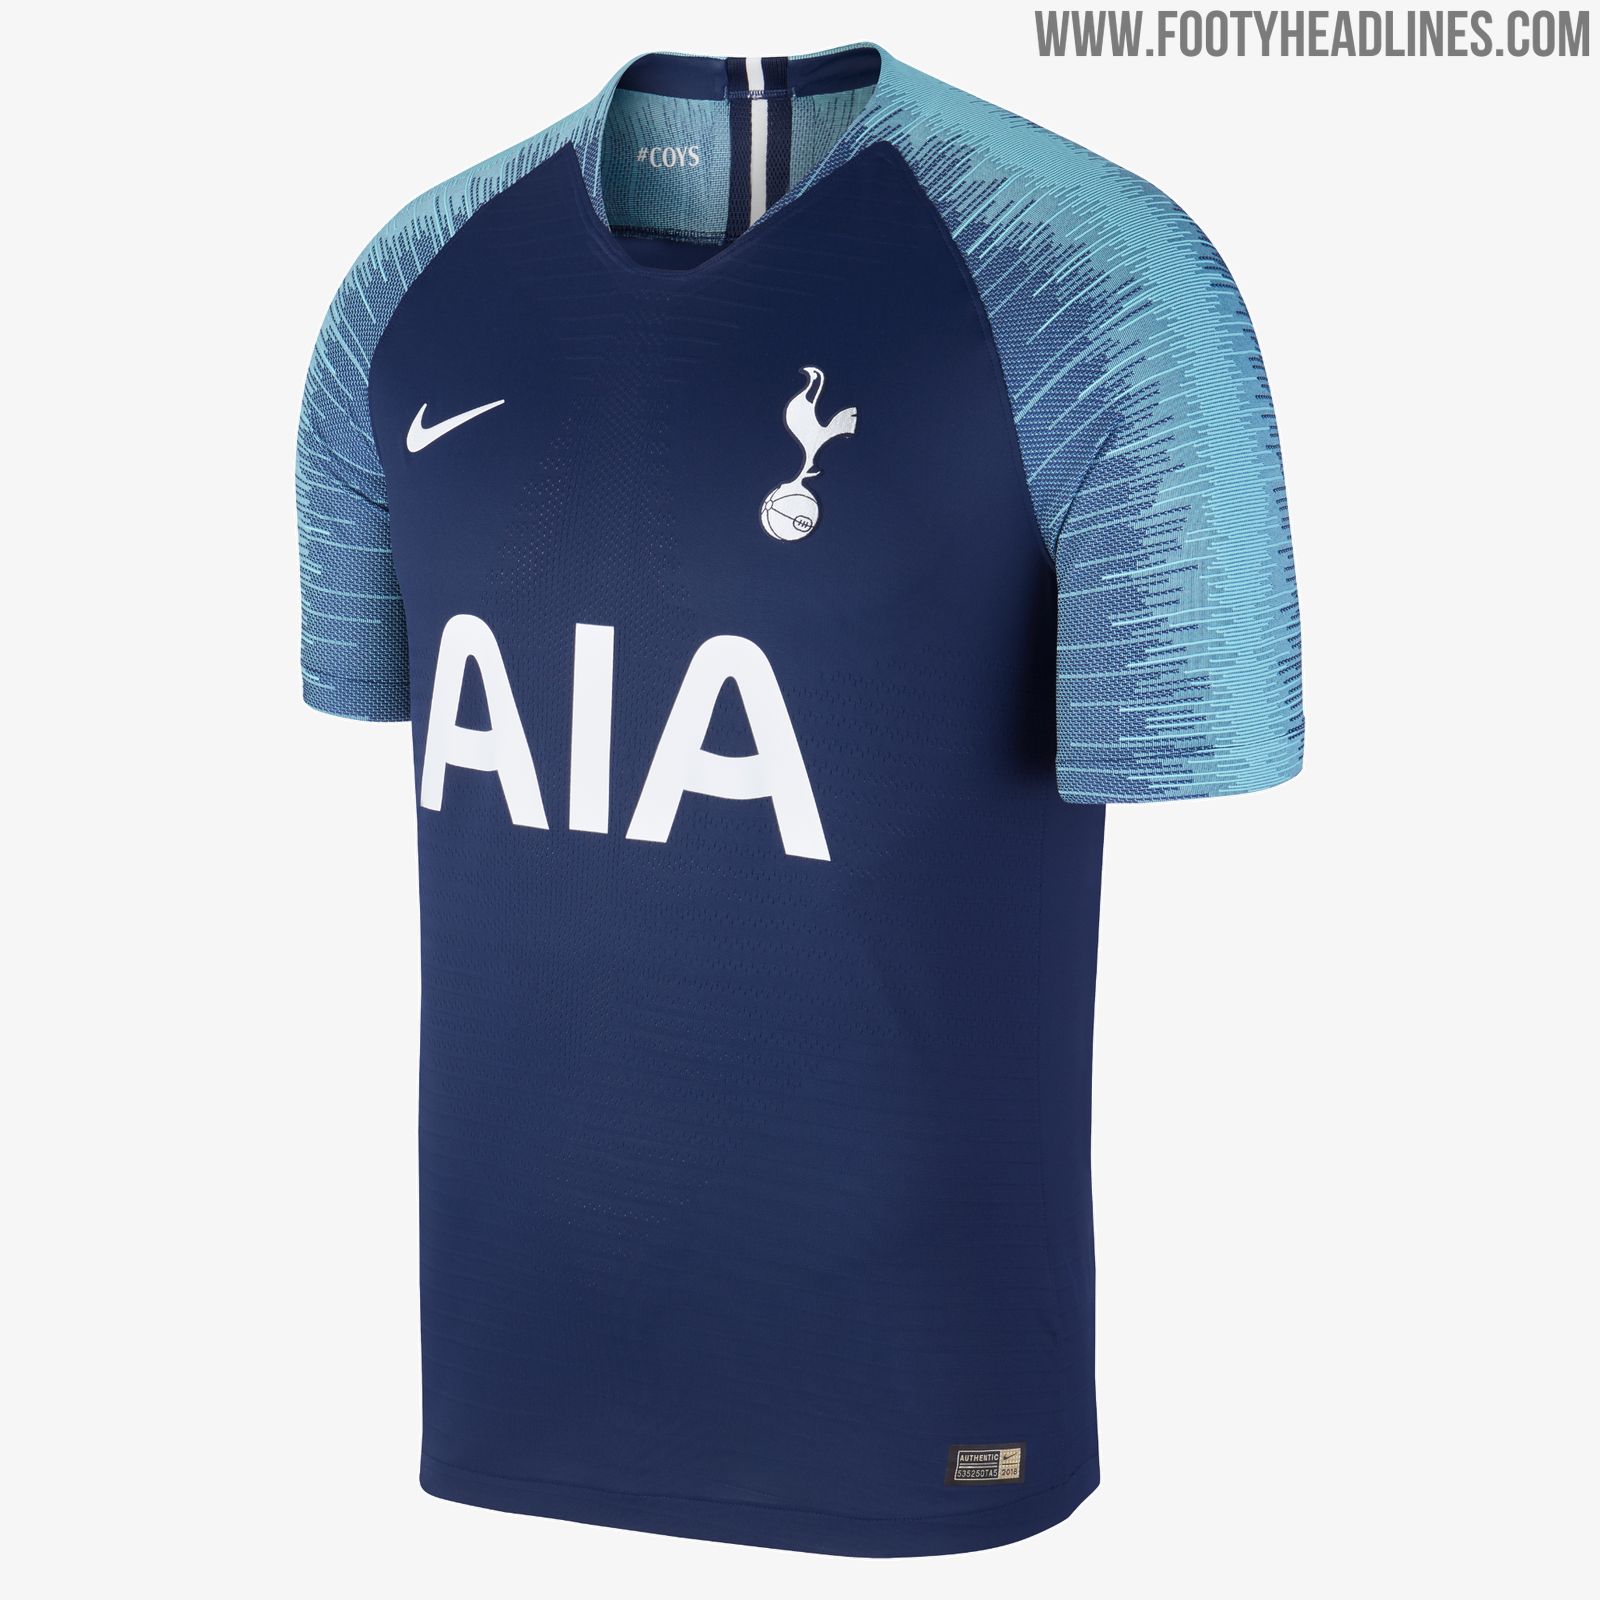 Tottenham Hotspur 2018-19 away kits leak online - Cartilage Free Captain